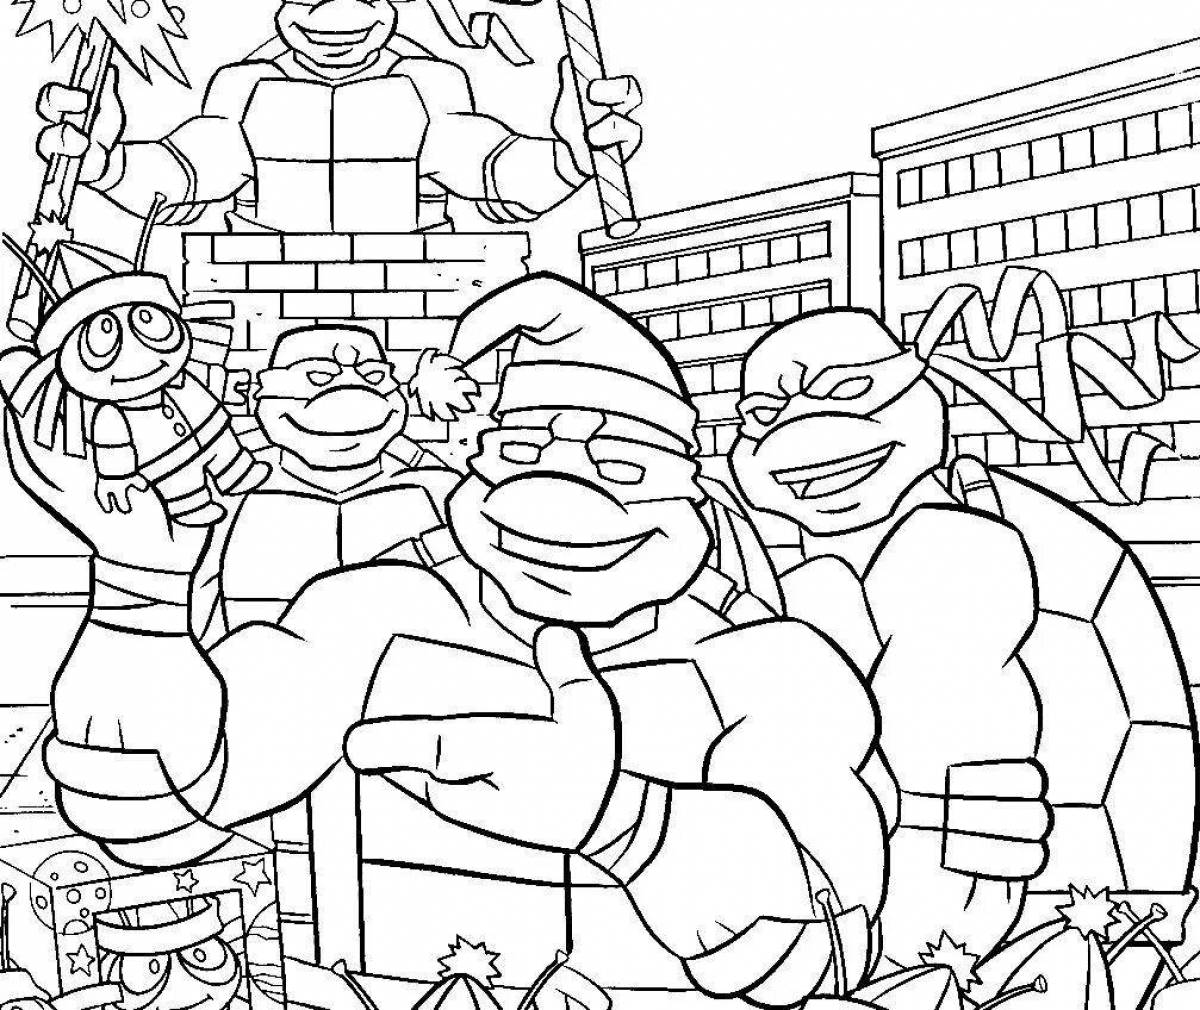 Joyful Teenage Mutant Ninja Turtles coloring pages for 5 year olds